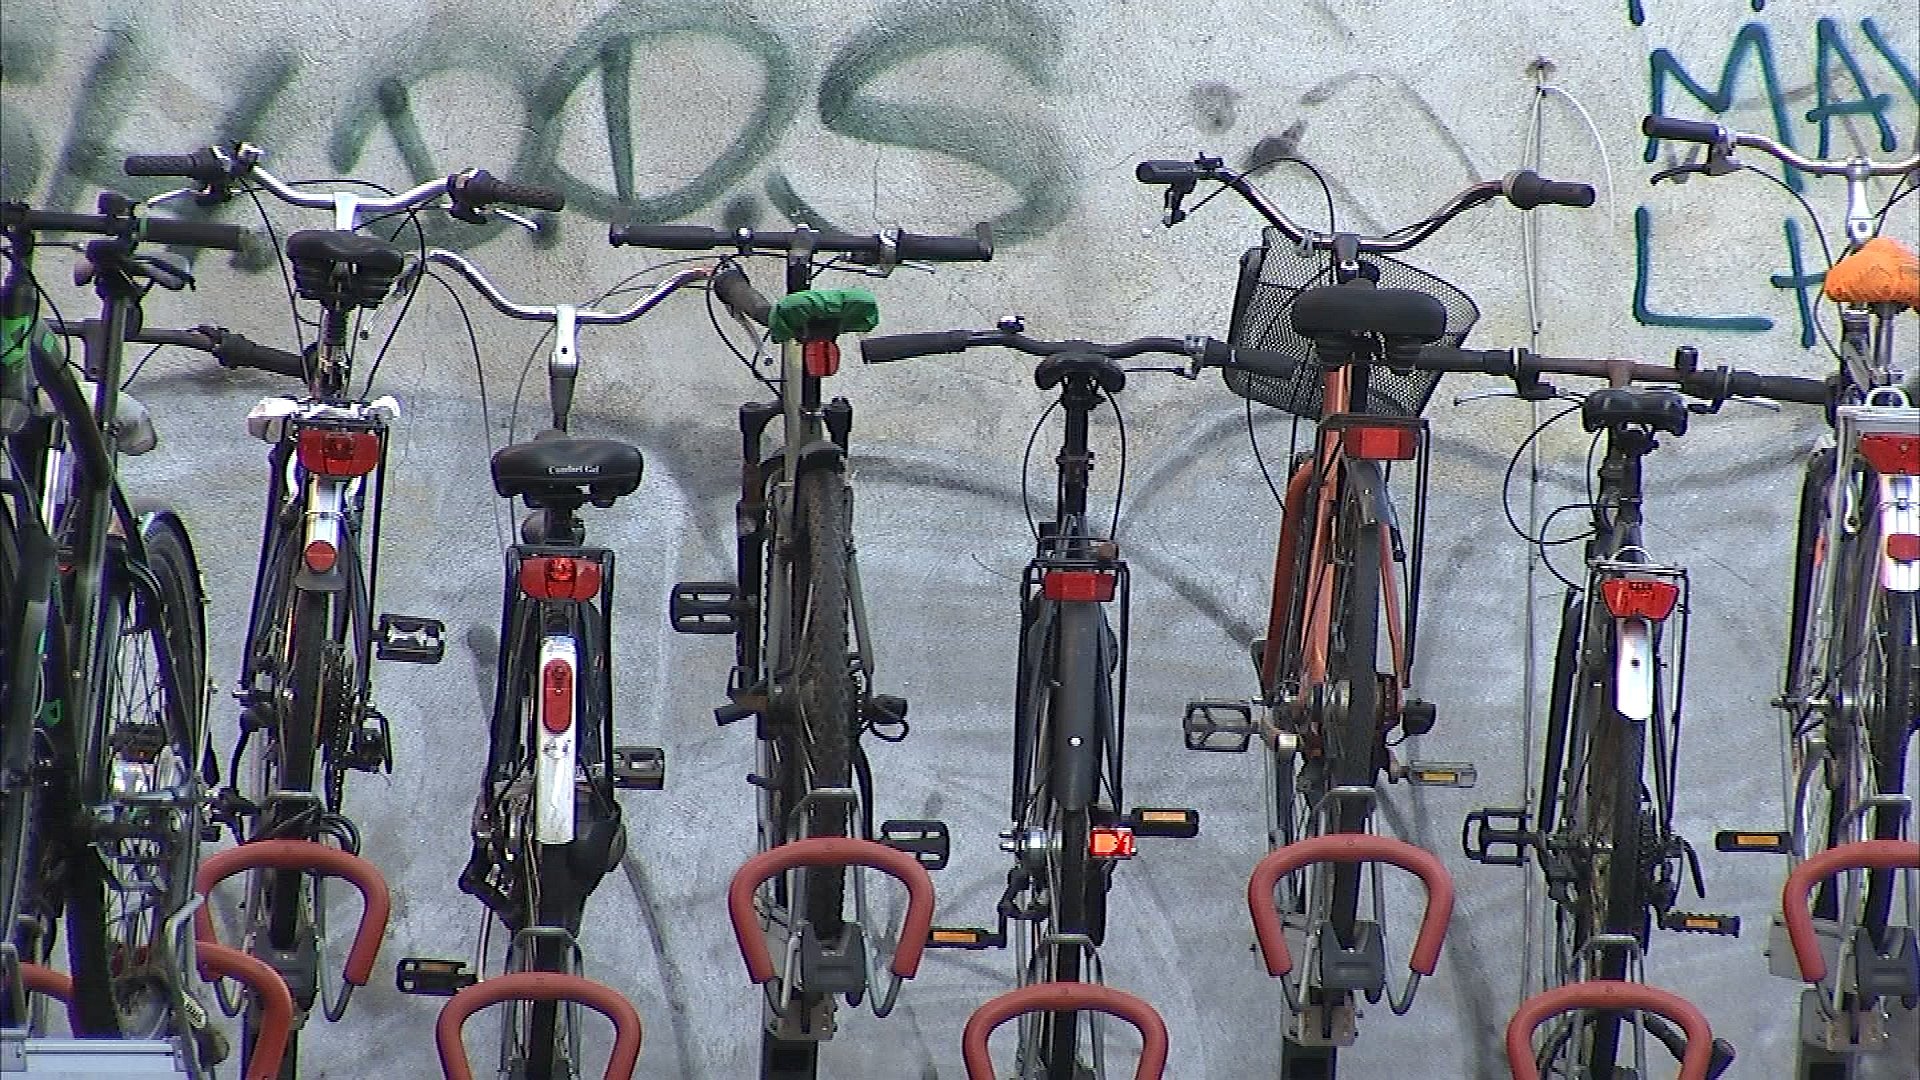 Cykeltyve bremset: Vidne to cykler i varevogn | TV2 Fyn